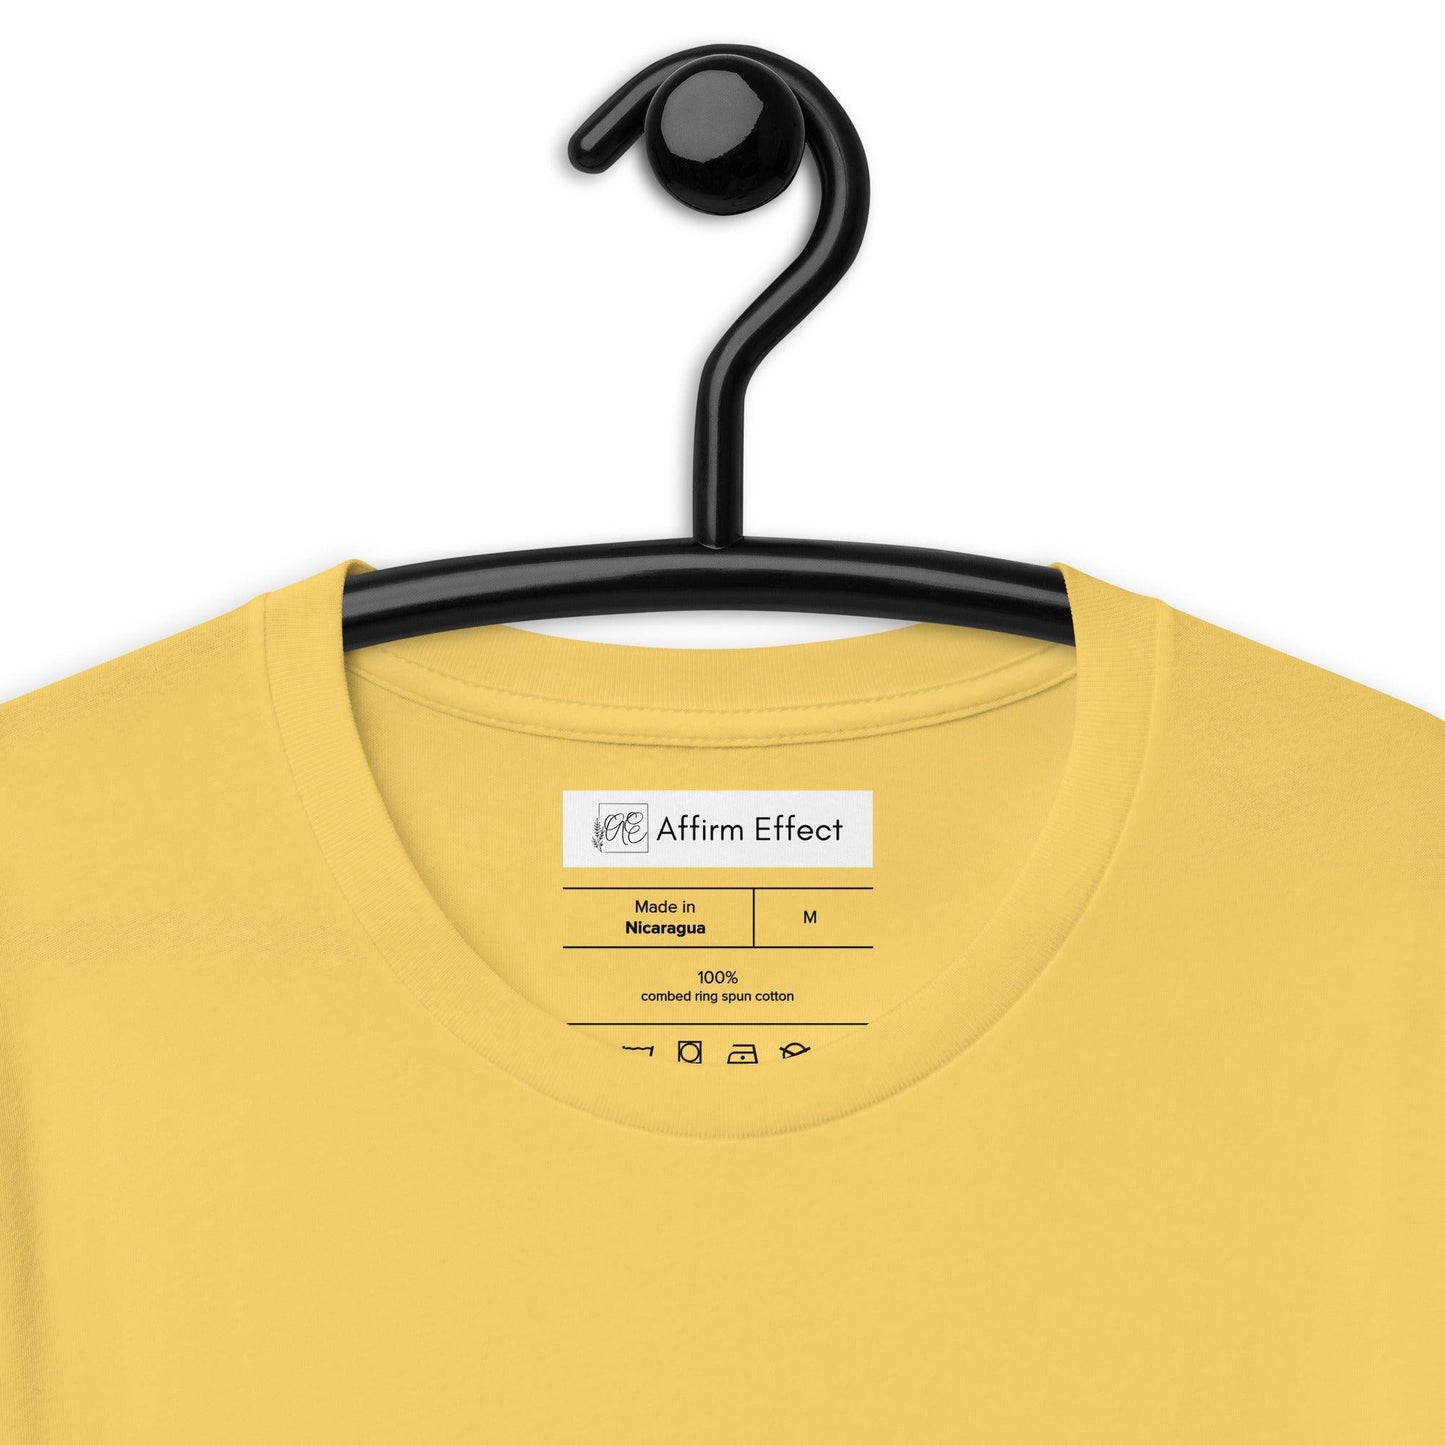 I Am Worthy (New) Short-Sleeve Unisex T-Shirt - Affirm Effect